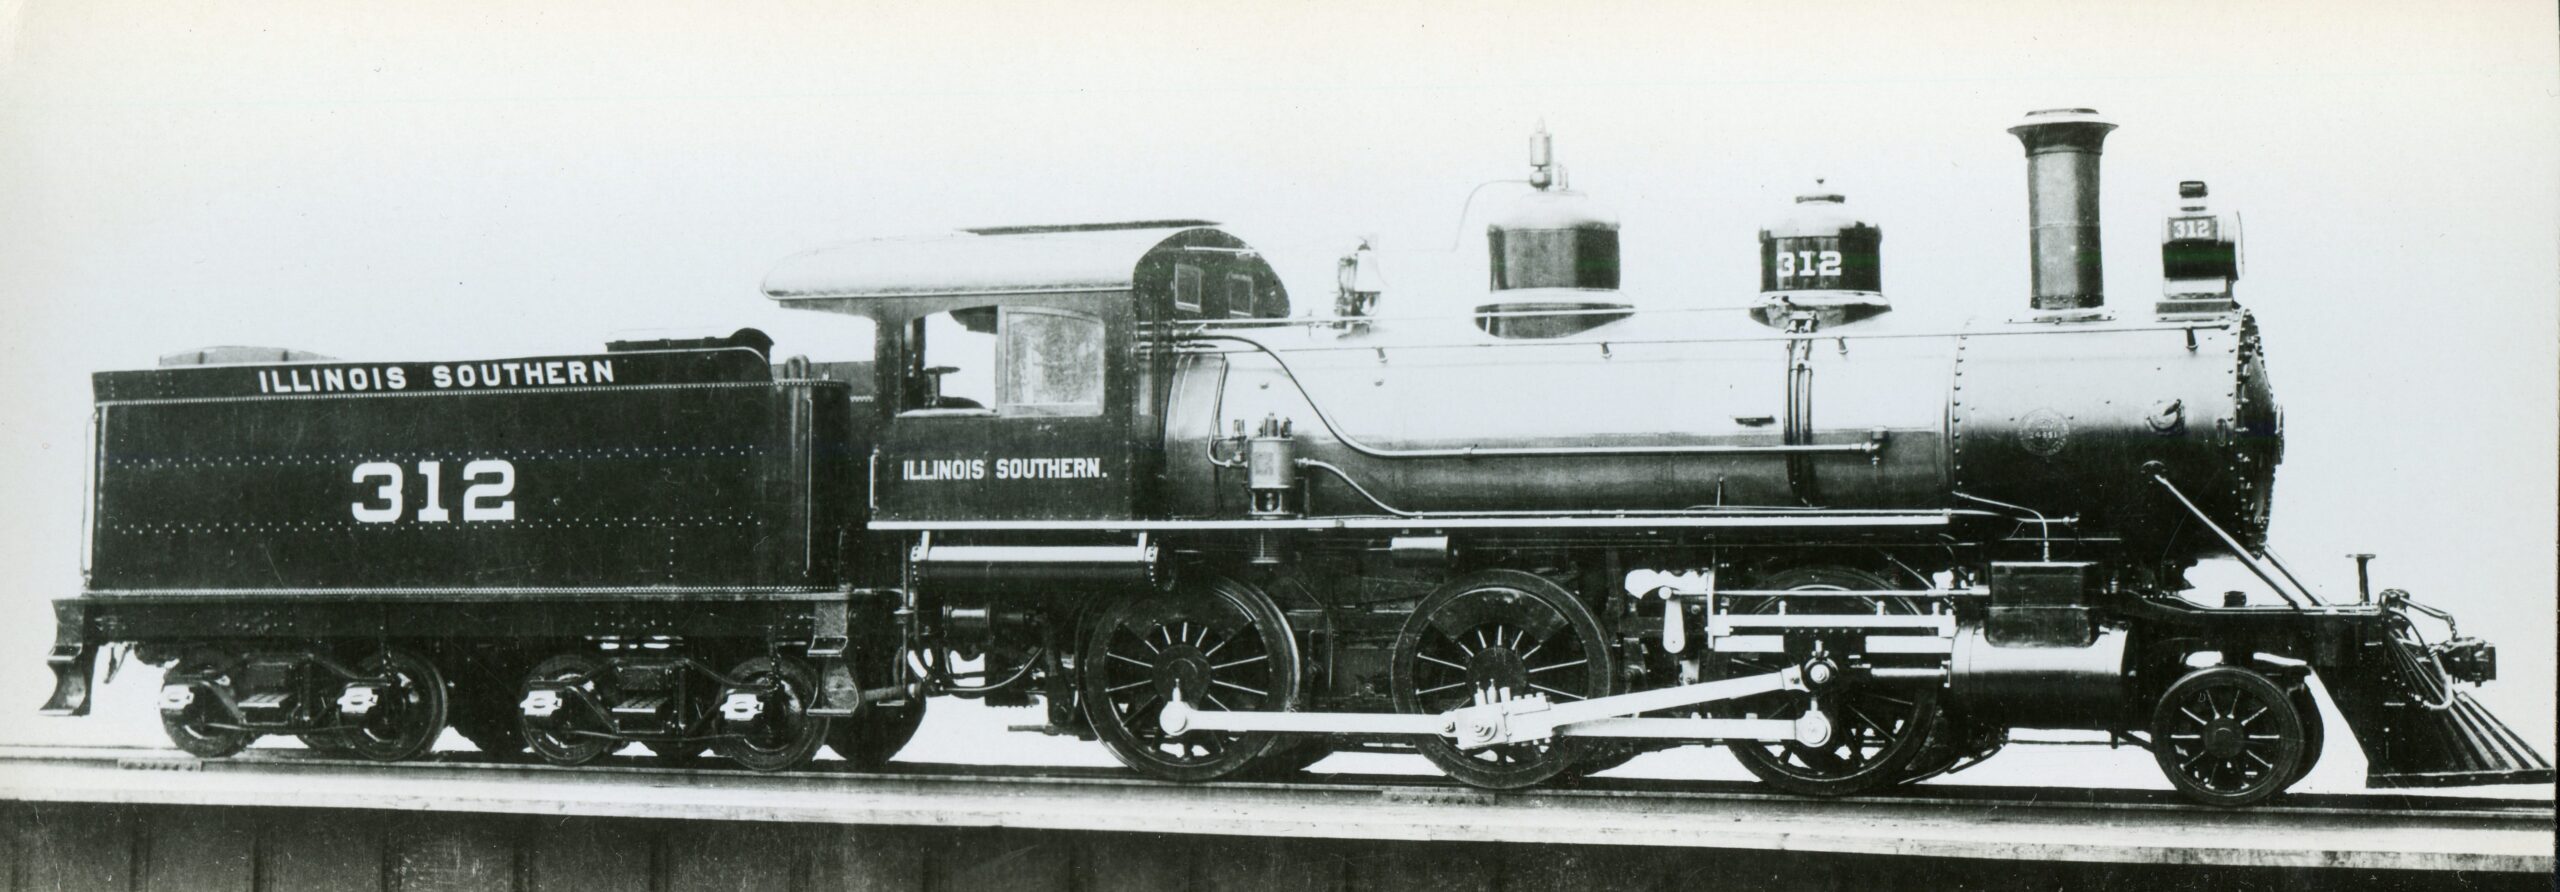 Illinois Southern | Eddystone, Pennsylvania | 2-6-0 #312 | 1904 | Baldwin Locomotive Works photograph